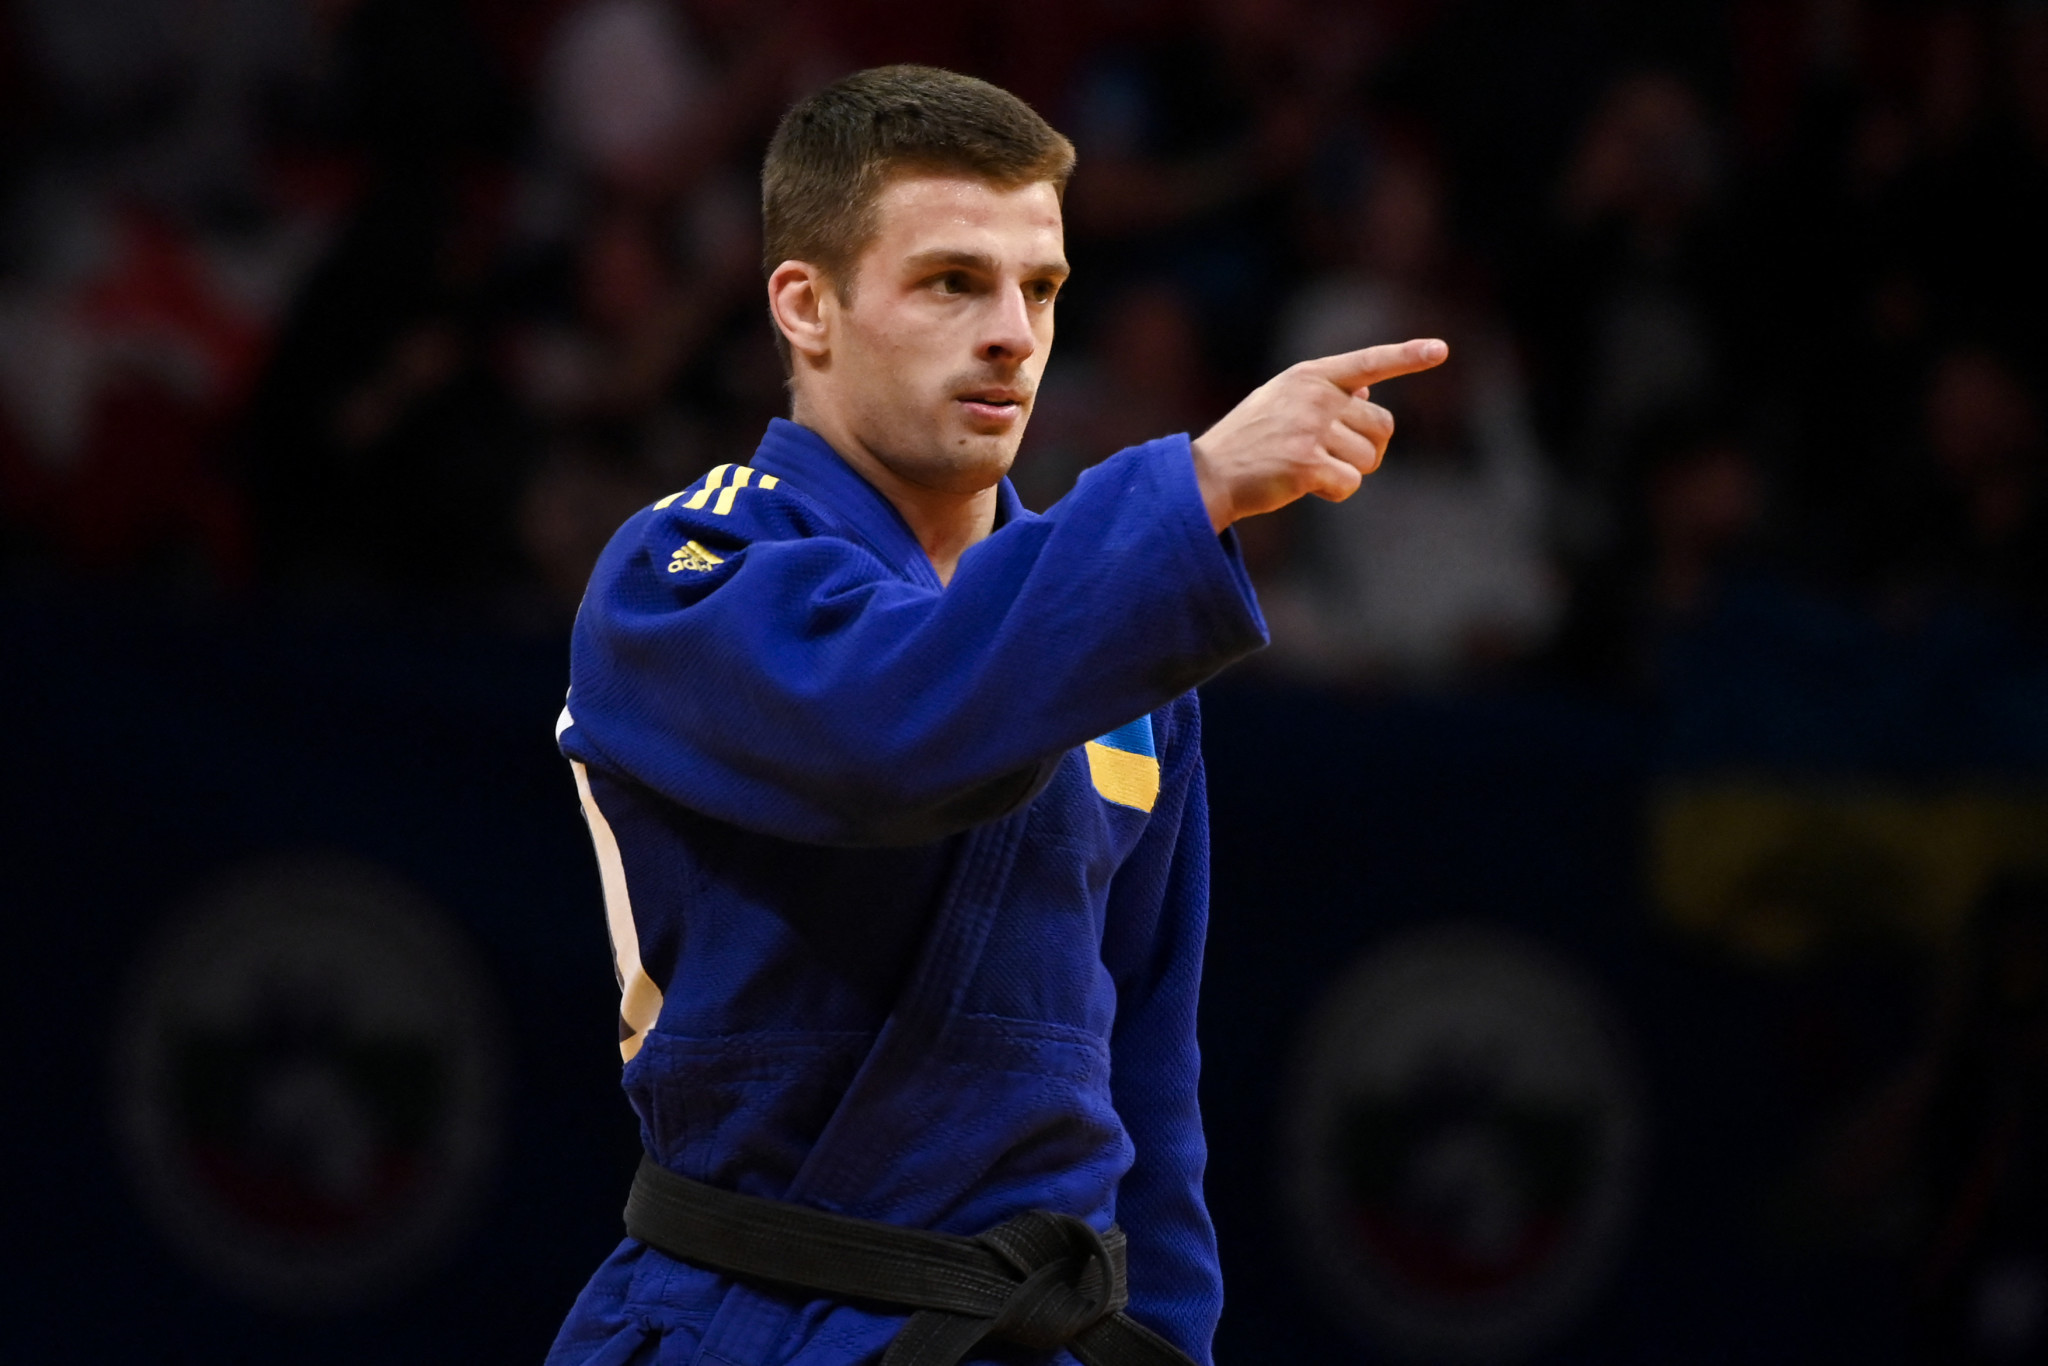 Ukraine’s Iadov among winners at European Judo Championships where Giles shocks Buchard